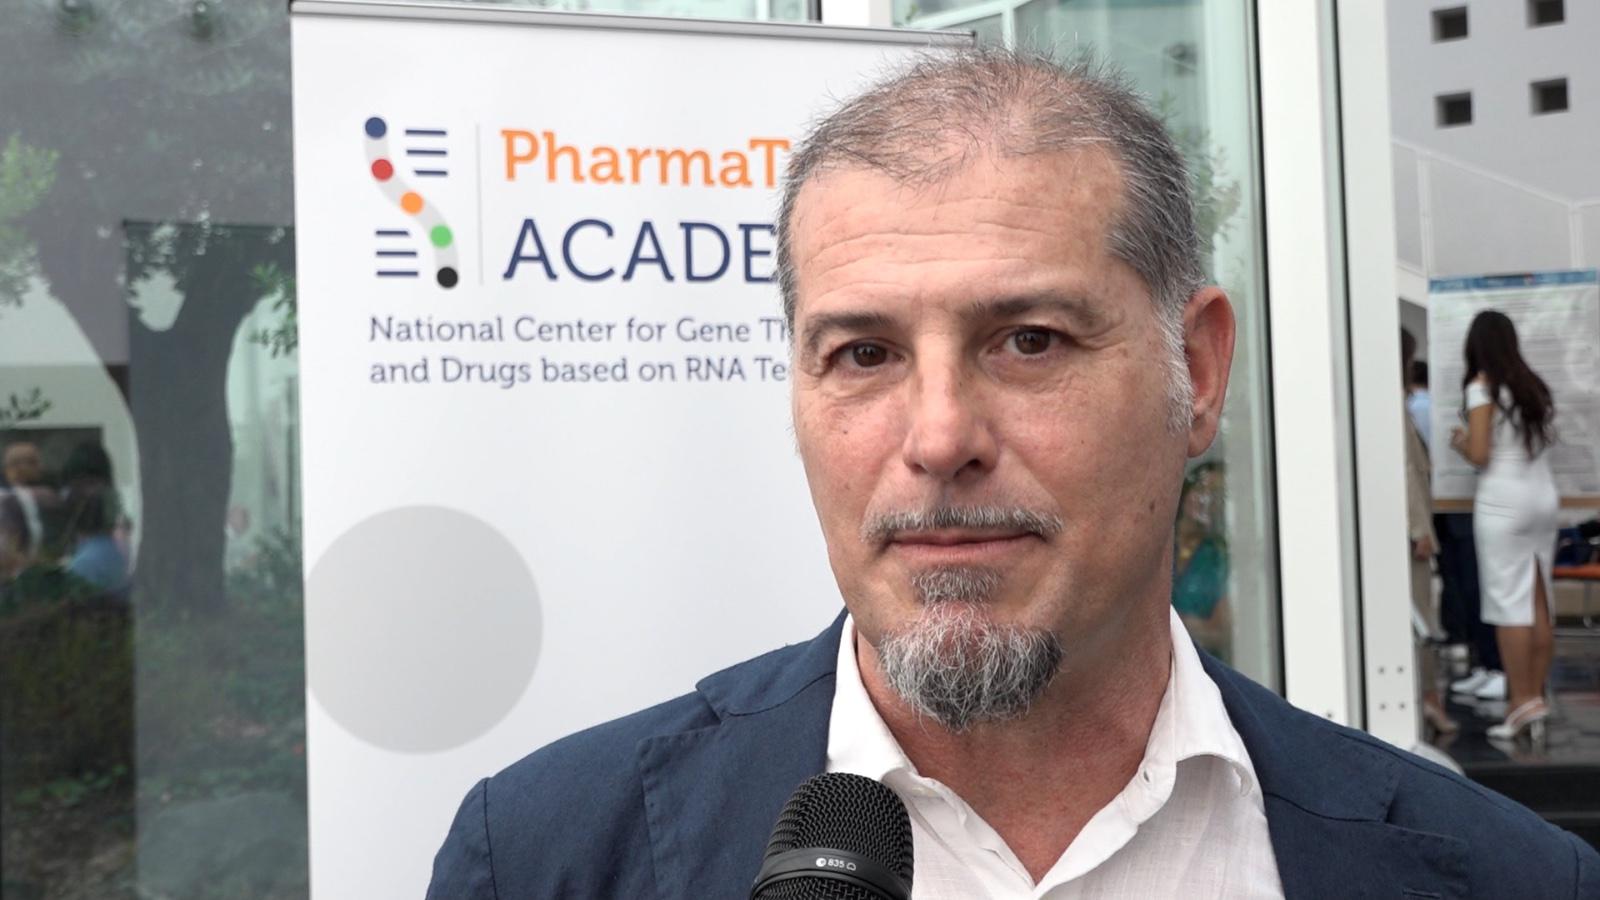 Catalanotti (Pharmatech Academy): Giovani formati su farmaci a Rna